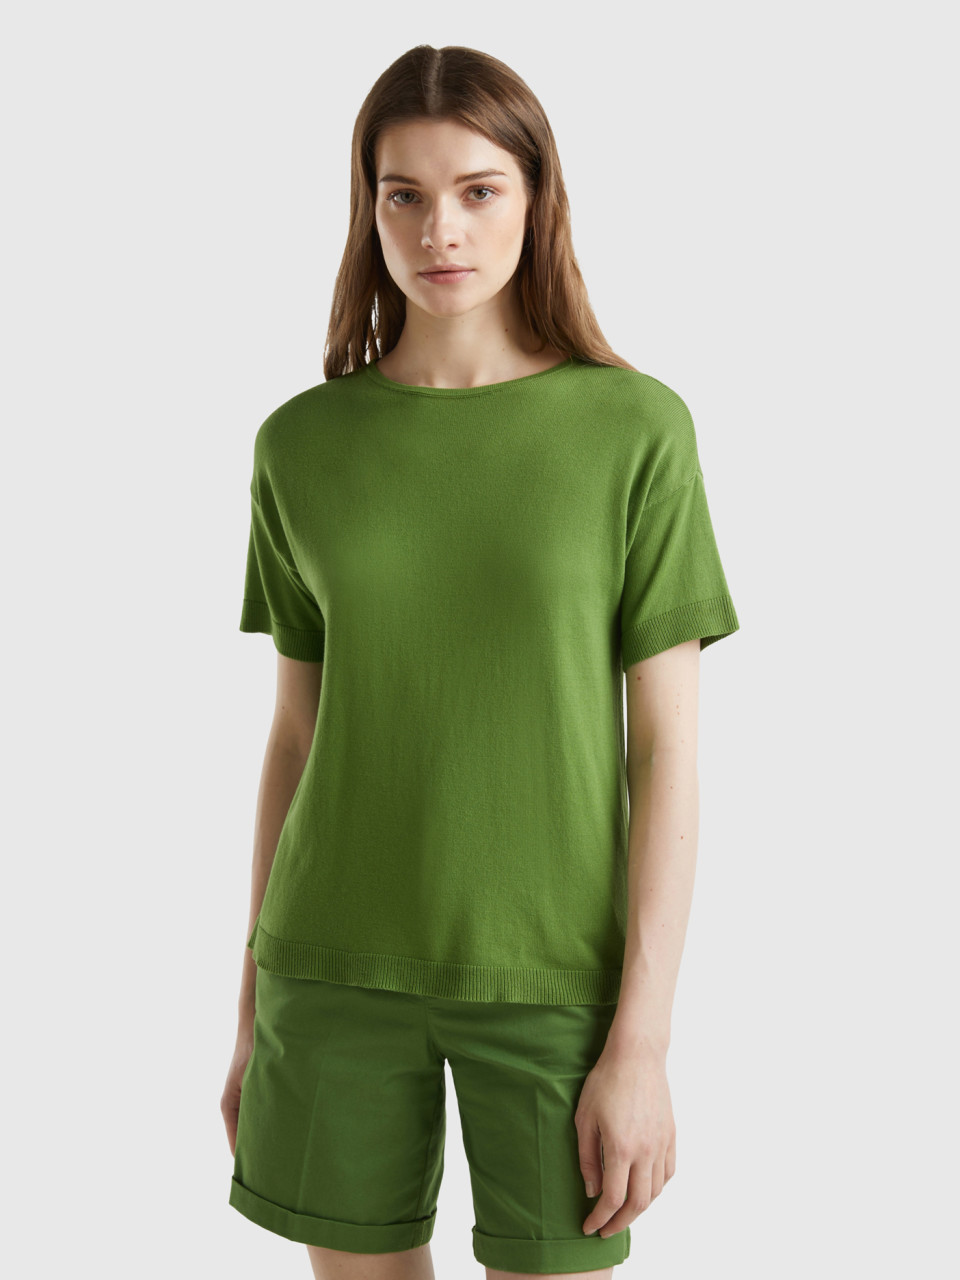 Benetton, Short Sleeve Sweater, Military Green, Women